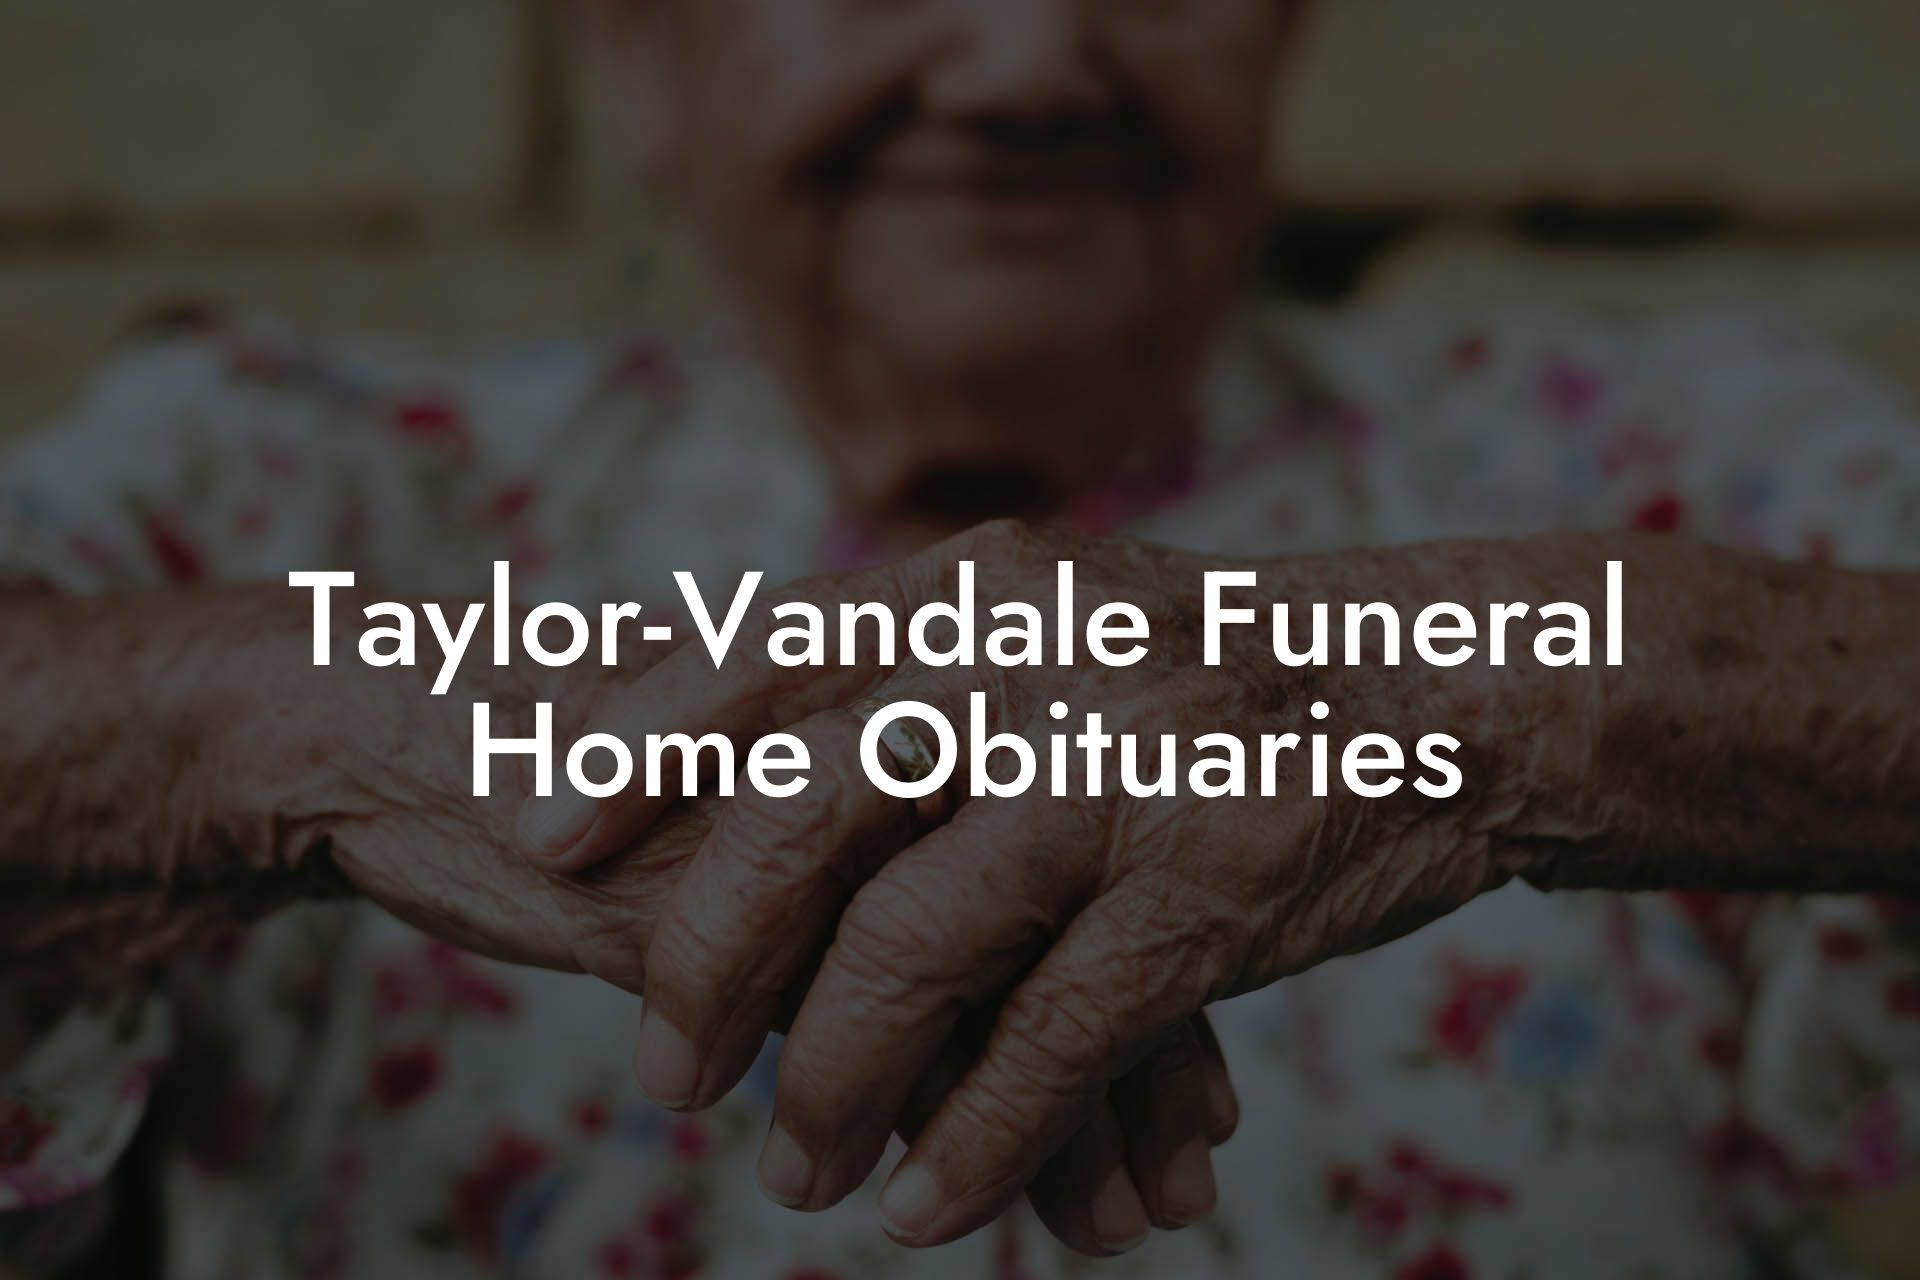 Taylor-Vandale Funeral Home Obituaries